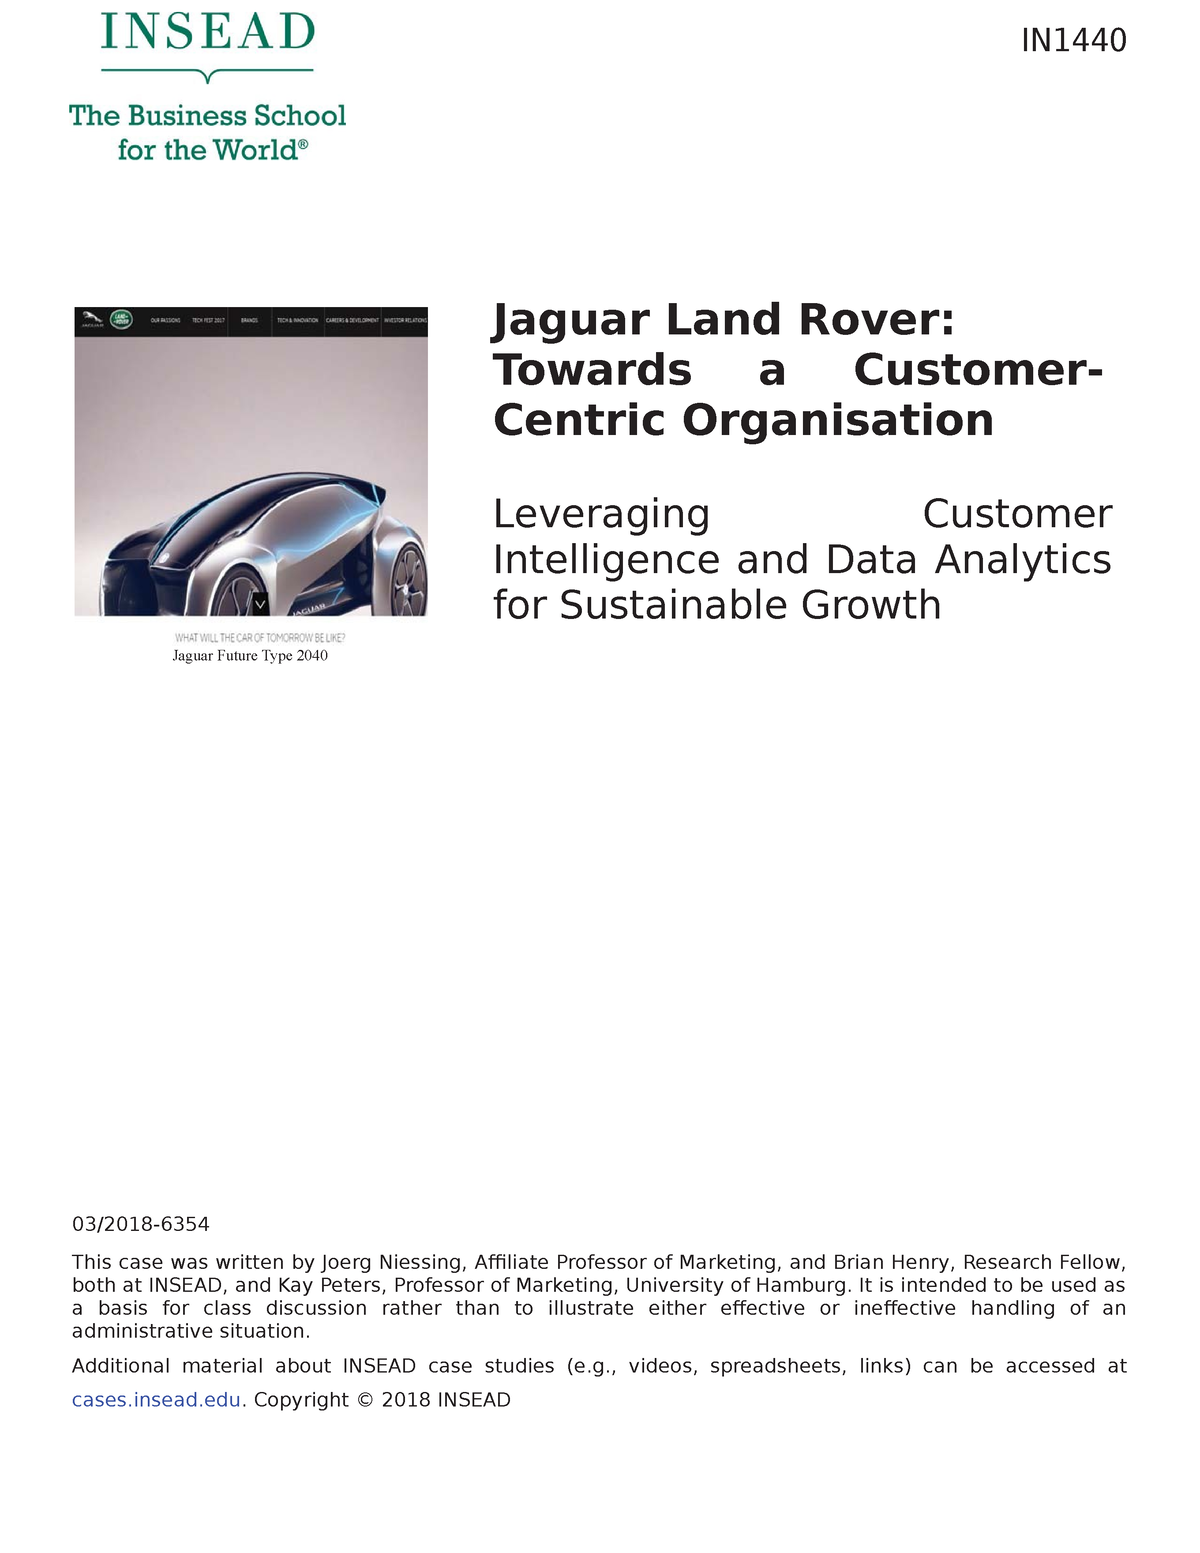 jaguar company case study